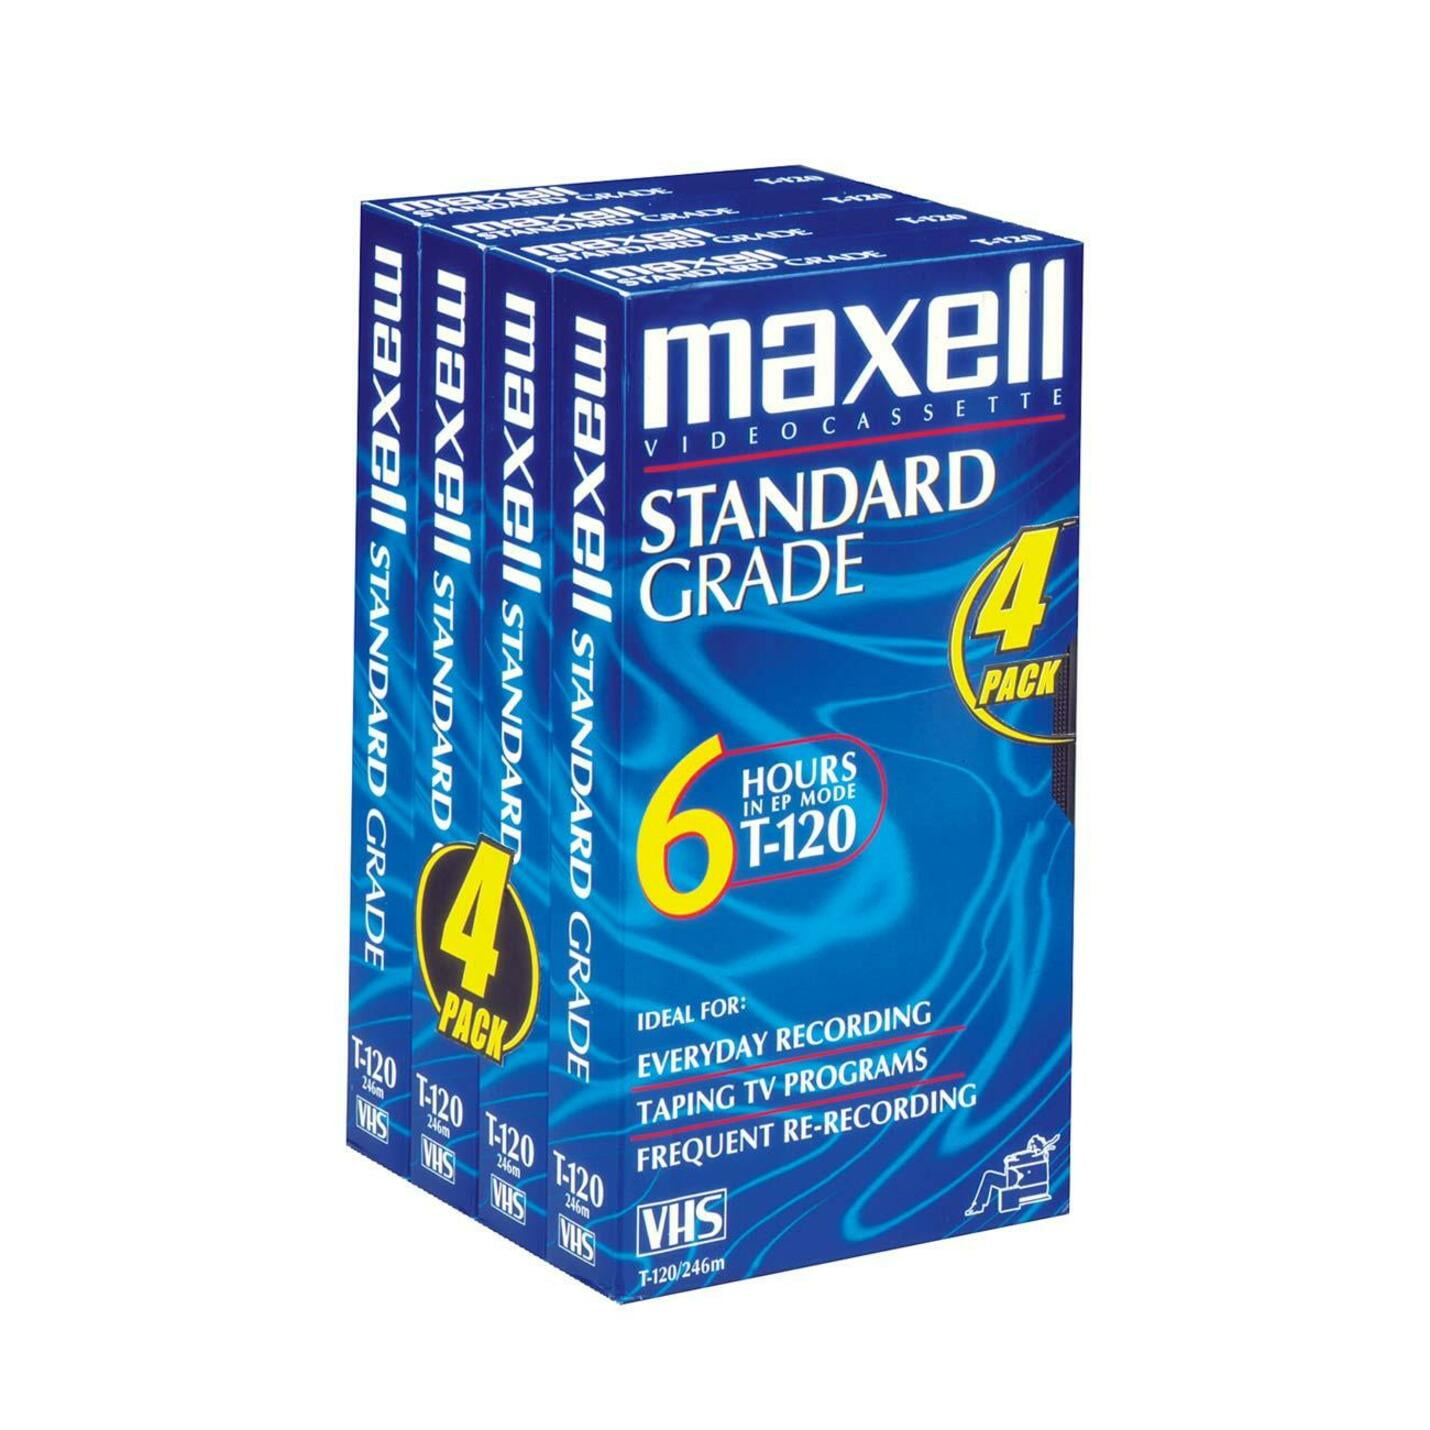 Maxell T-120 6 Hours Standard Grade VHS Video Cassette Excellent Performance 